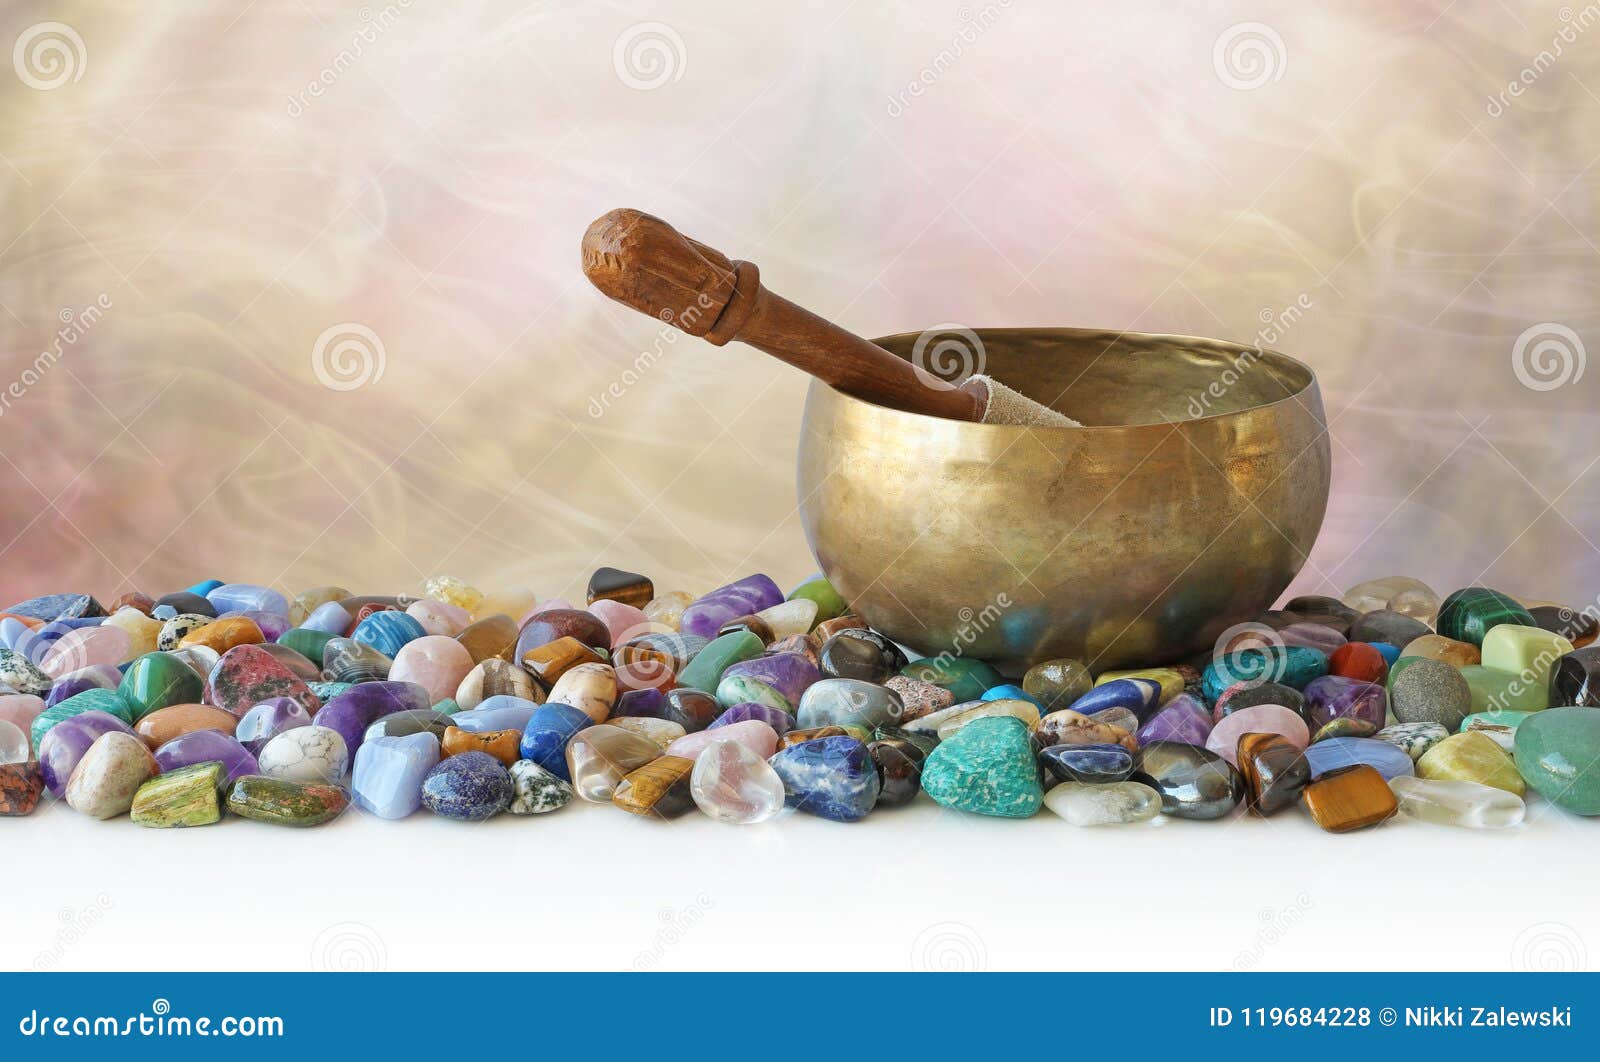 tibetan singing bowl surrounded by tumbled healing stones